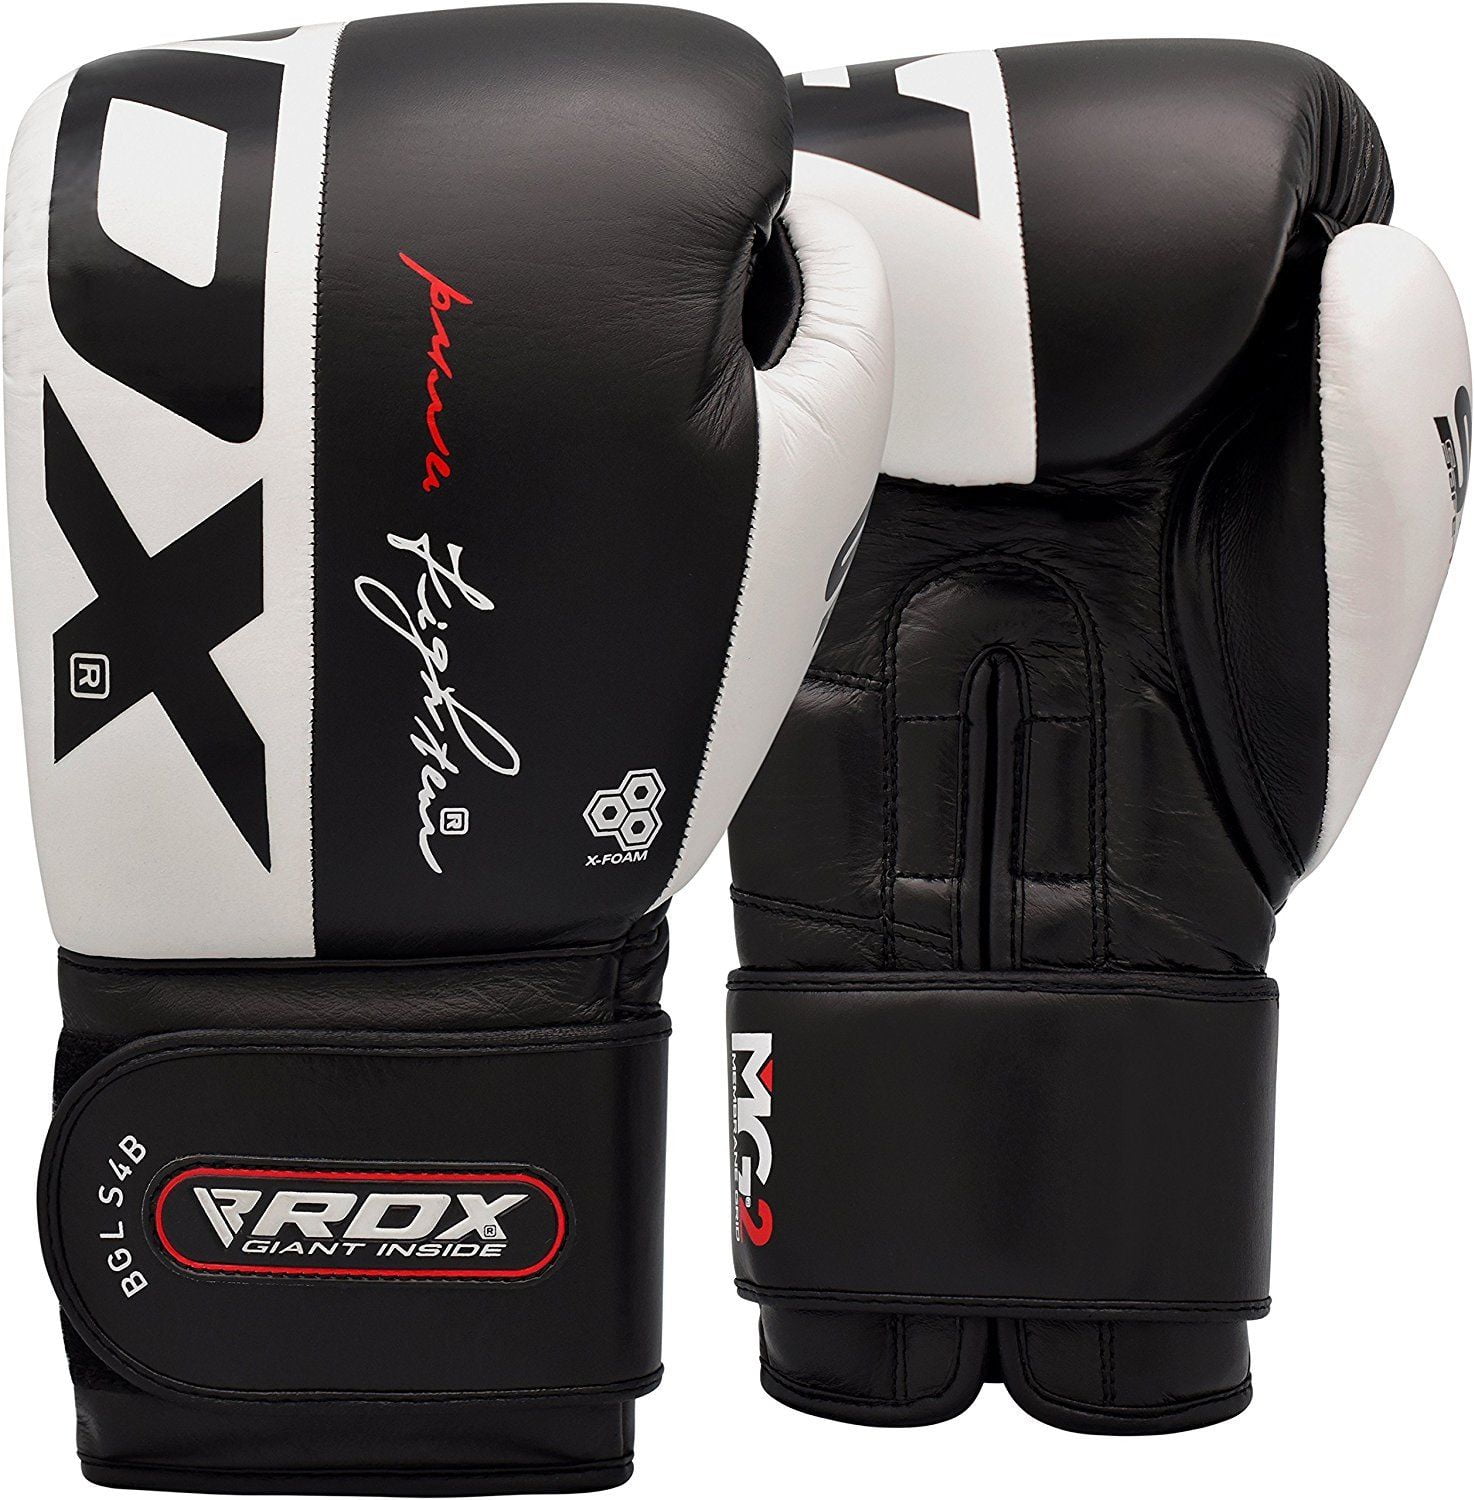 Farabi Genuine Leather Target Series Training MMA Punching Boxing Gloves 